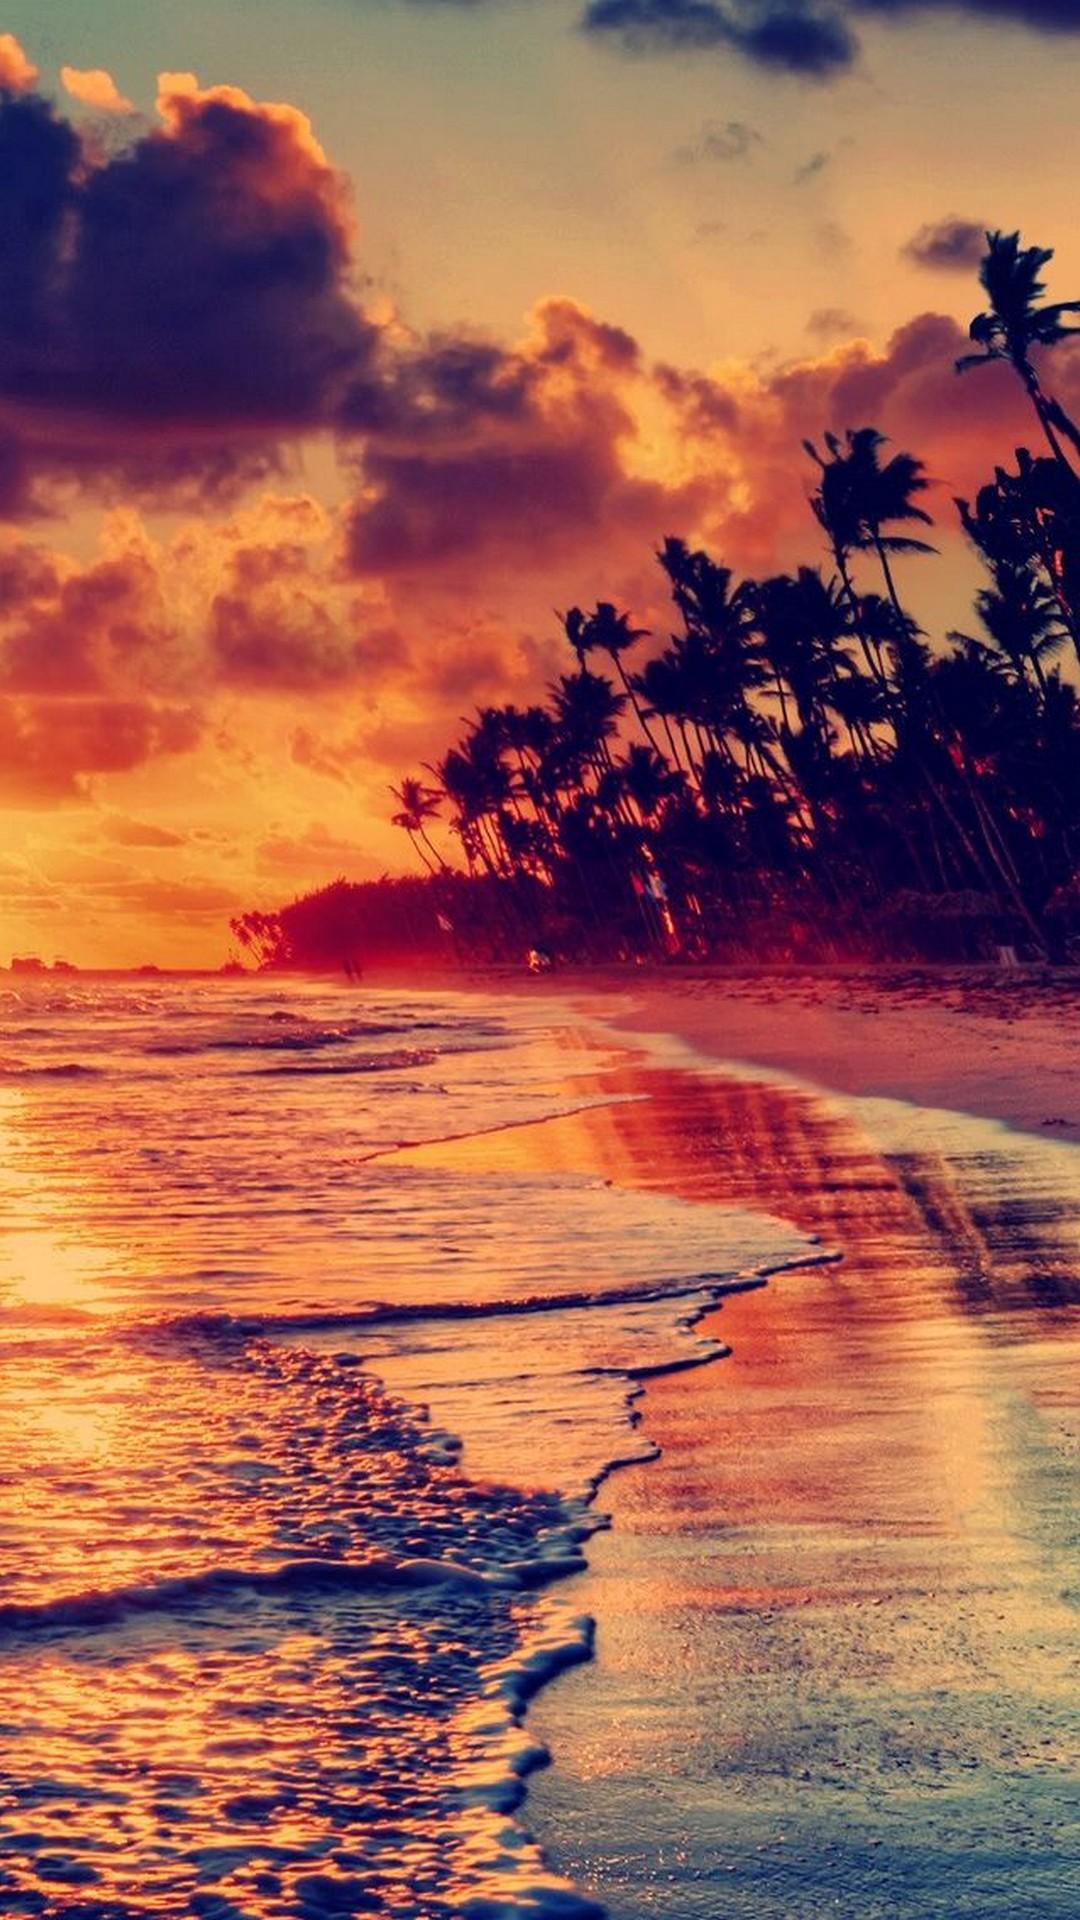 Beach, Summer, And Sea Image iPhone Wallpaper HD